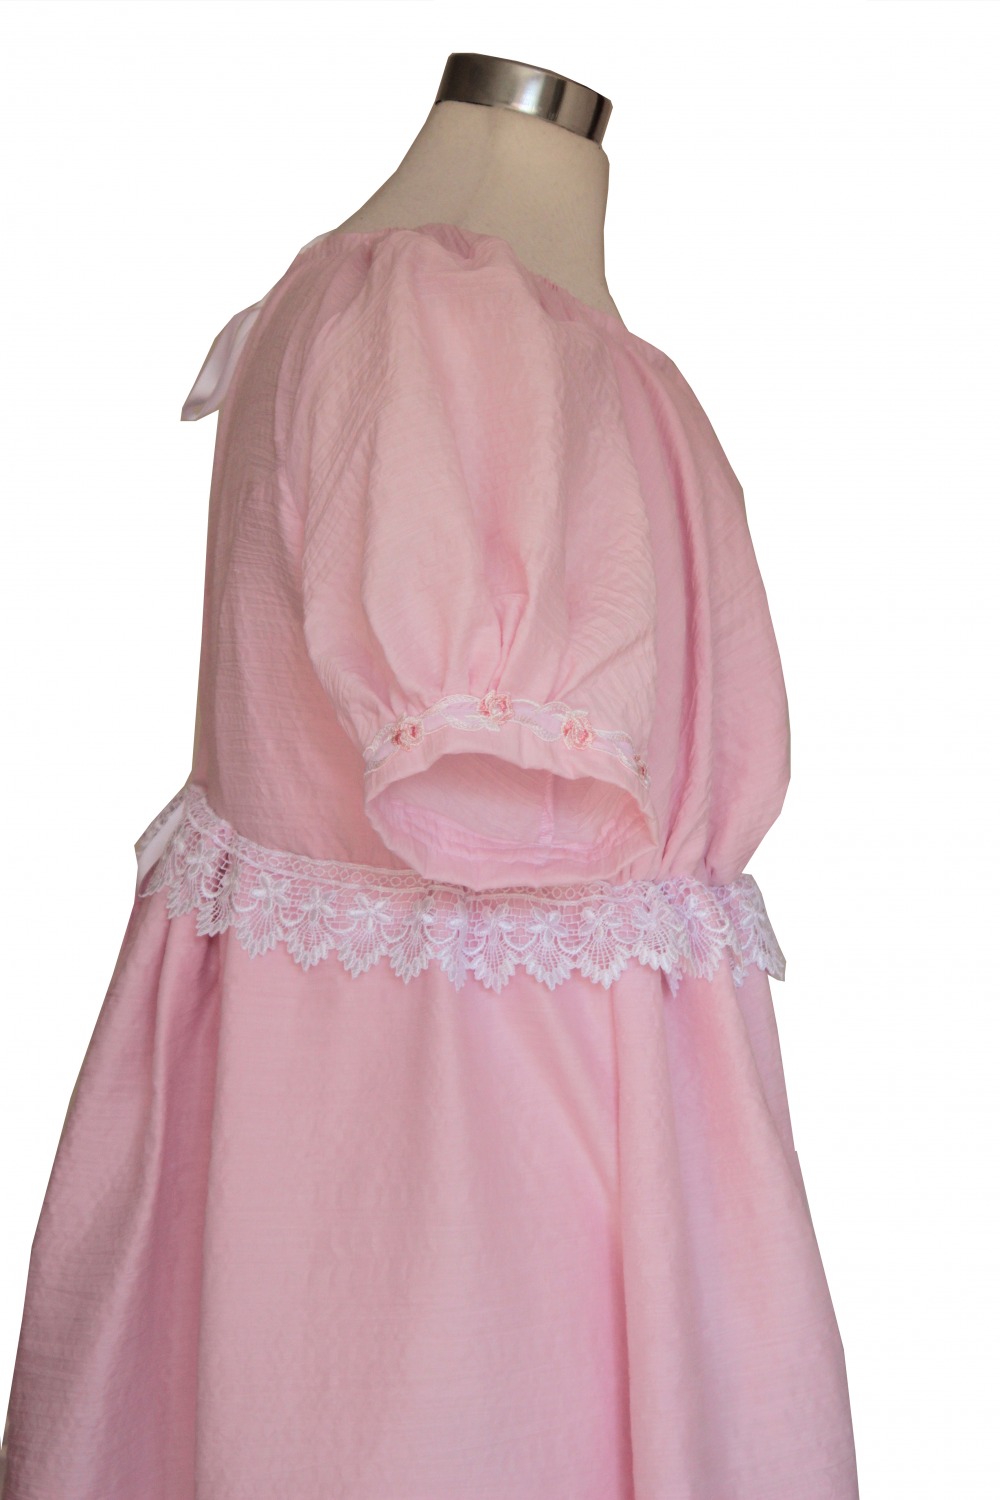 Ladies 18th 19th Century Regency Jane Austen Costume Size 24 - 26 Image